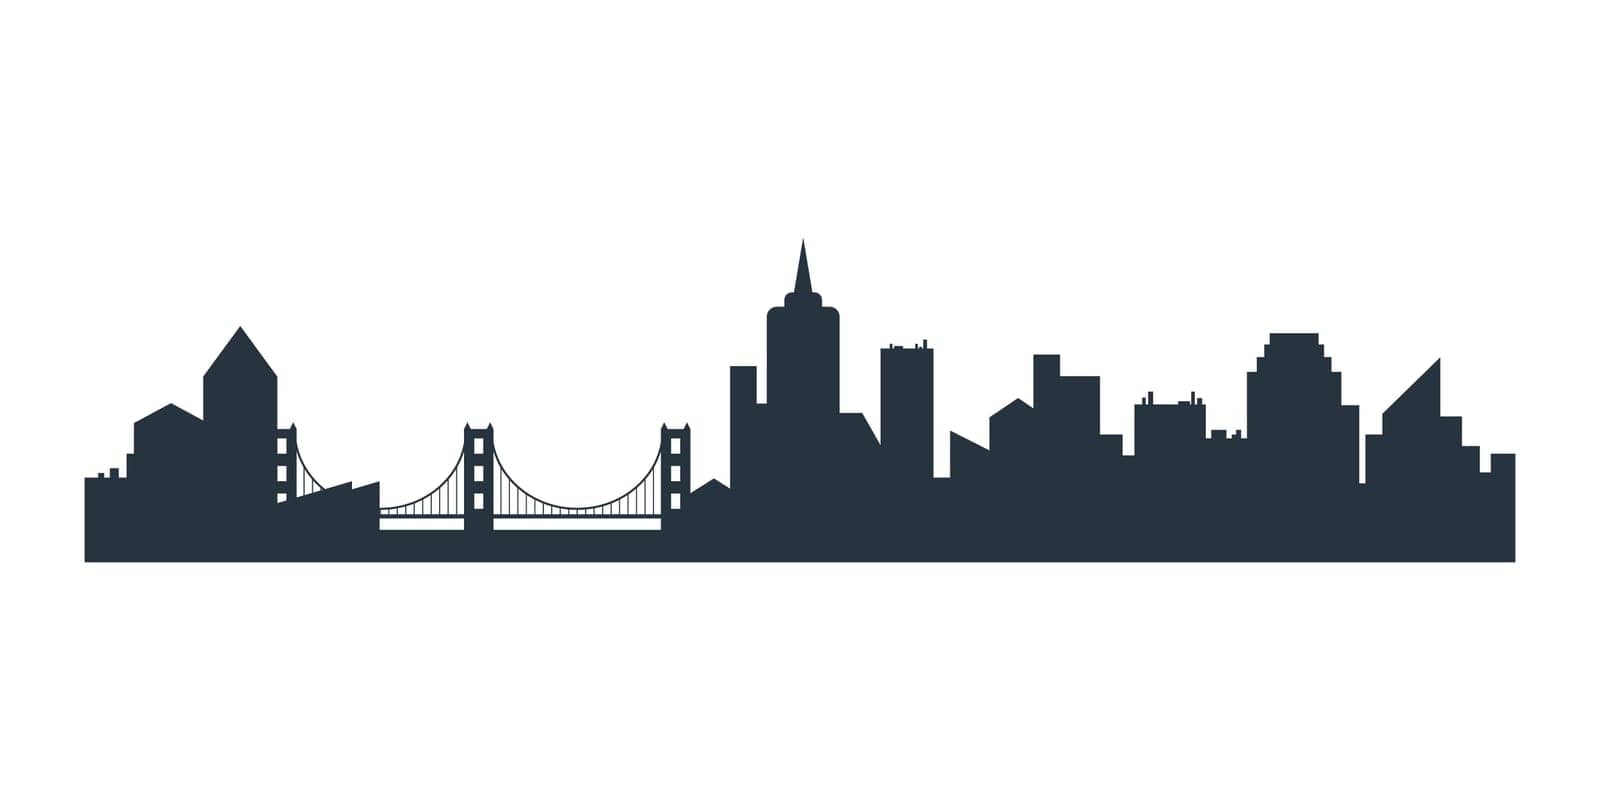 City silhouettes, urban horizon with bridge, corporate skyscrapers vector illustration